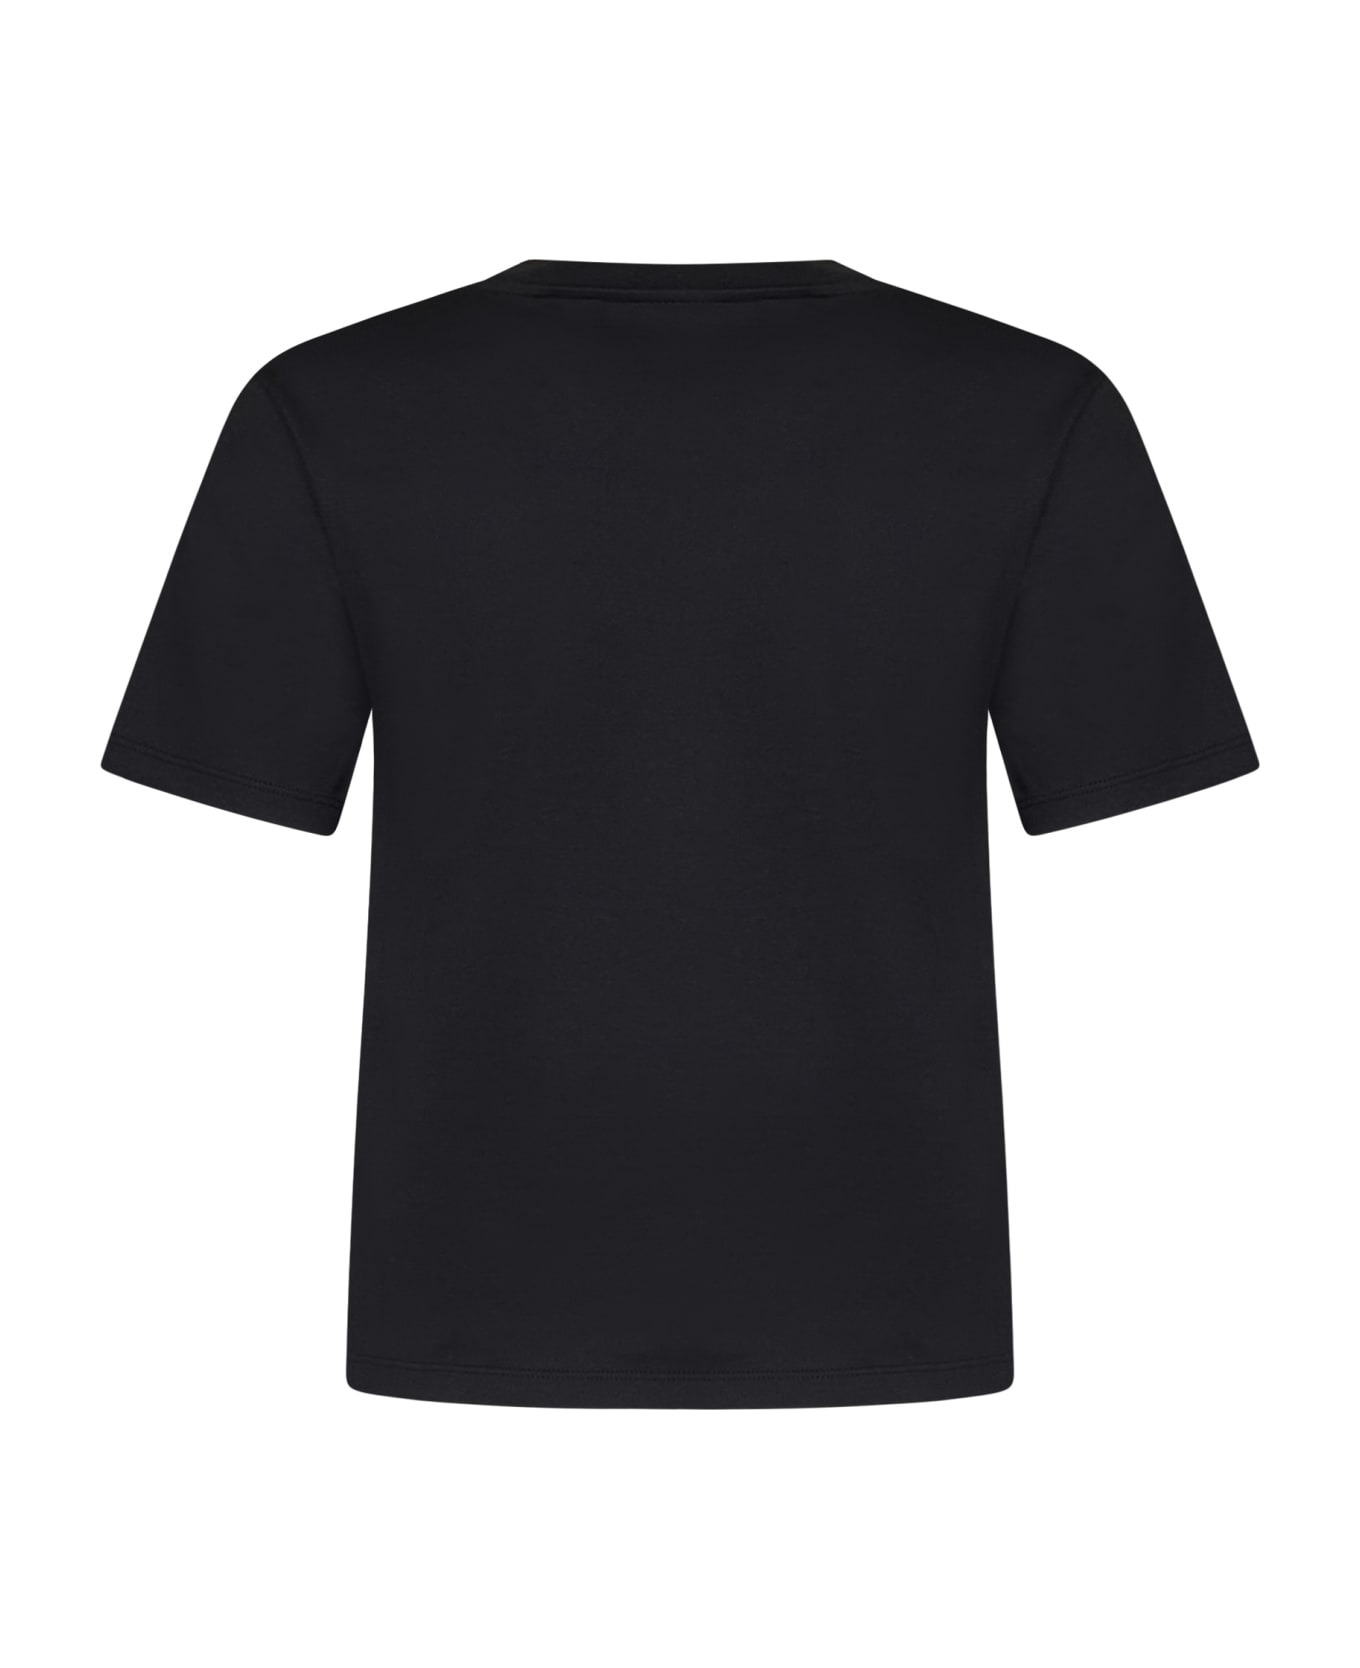 Palm Angels T-shirt - Black